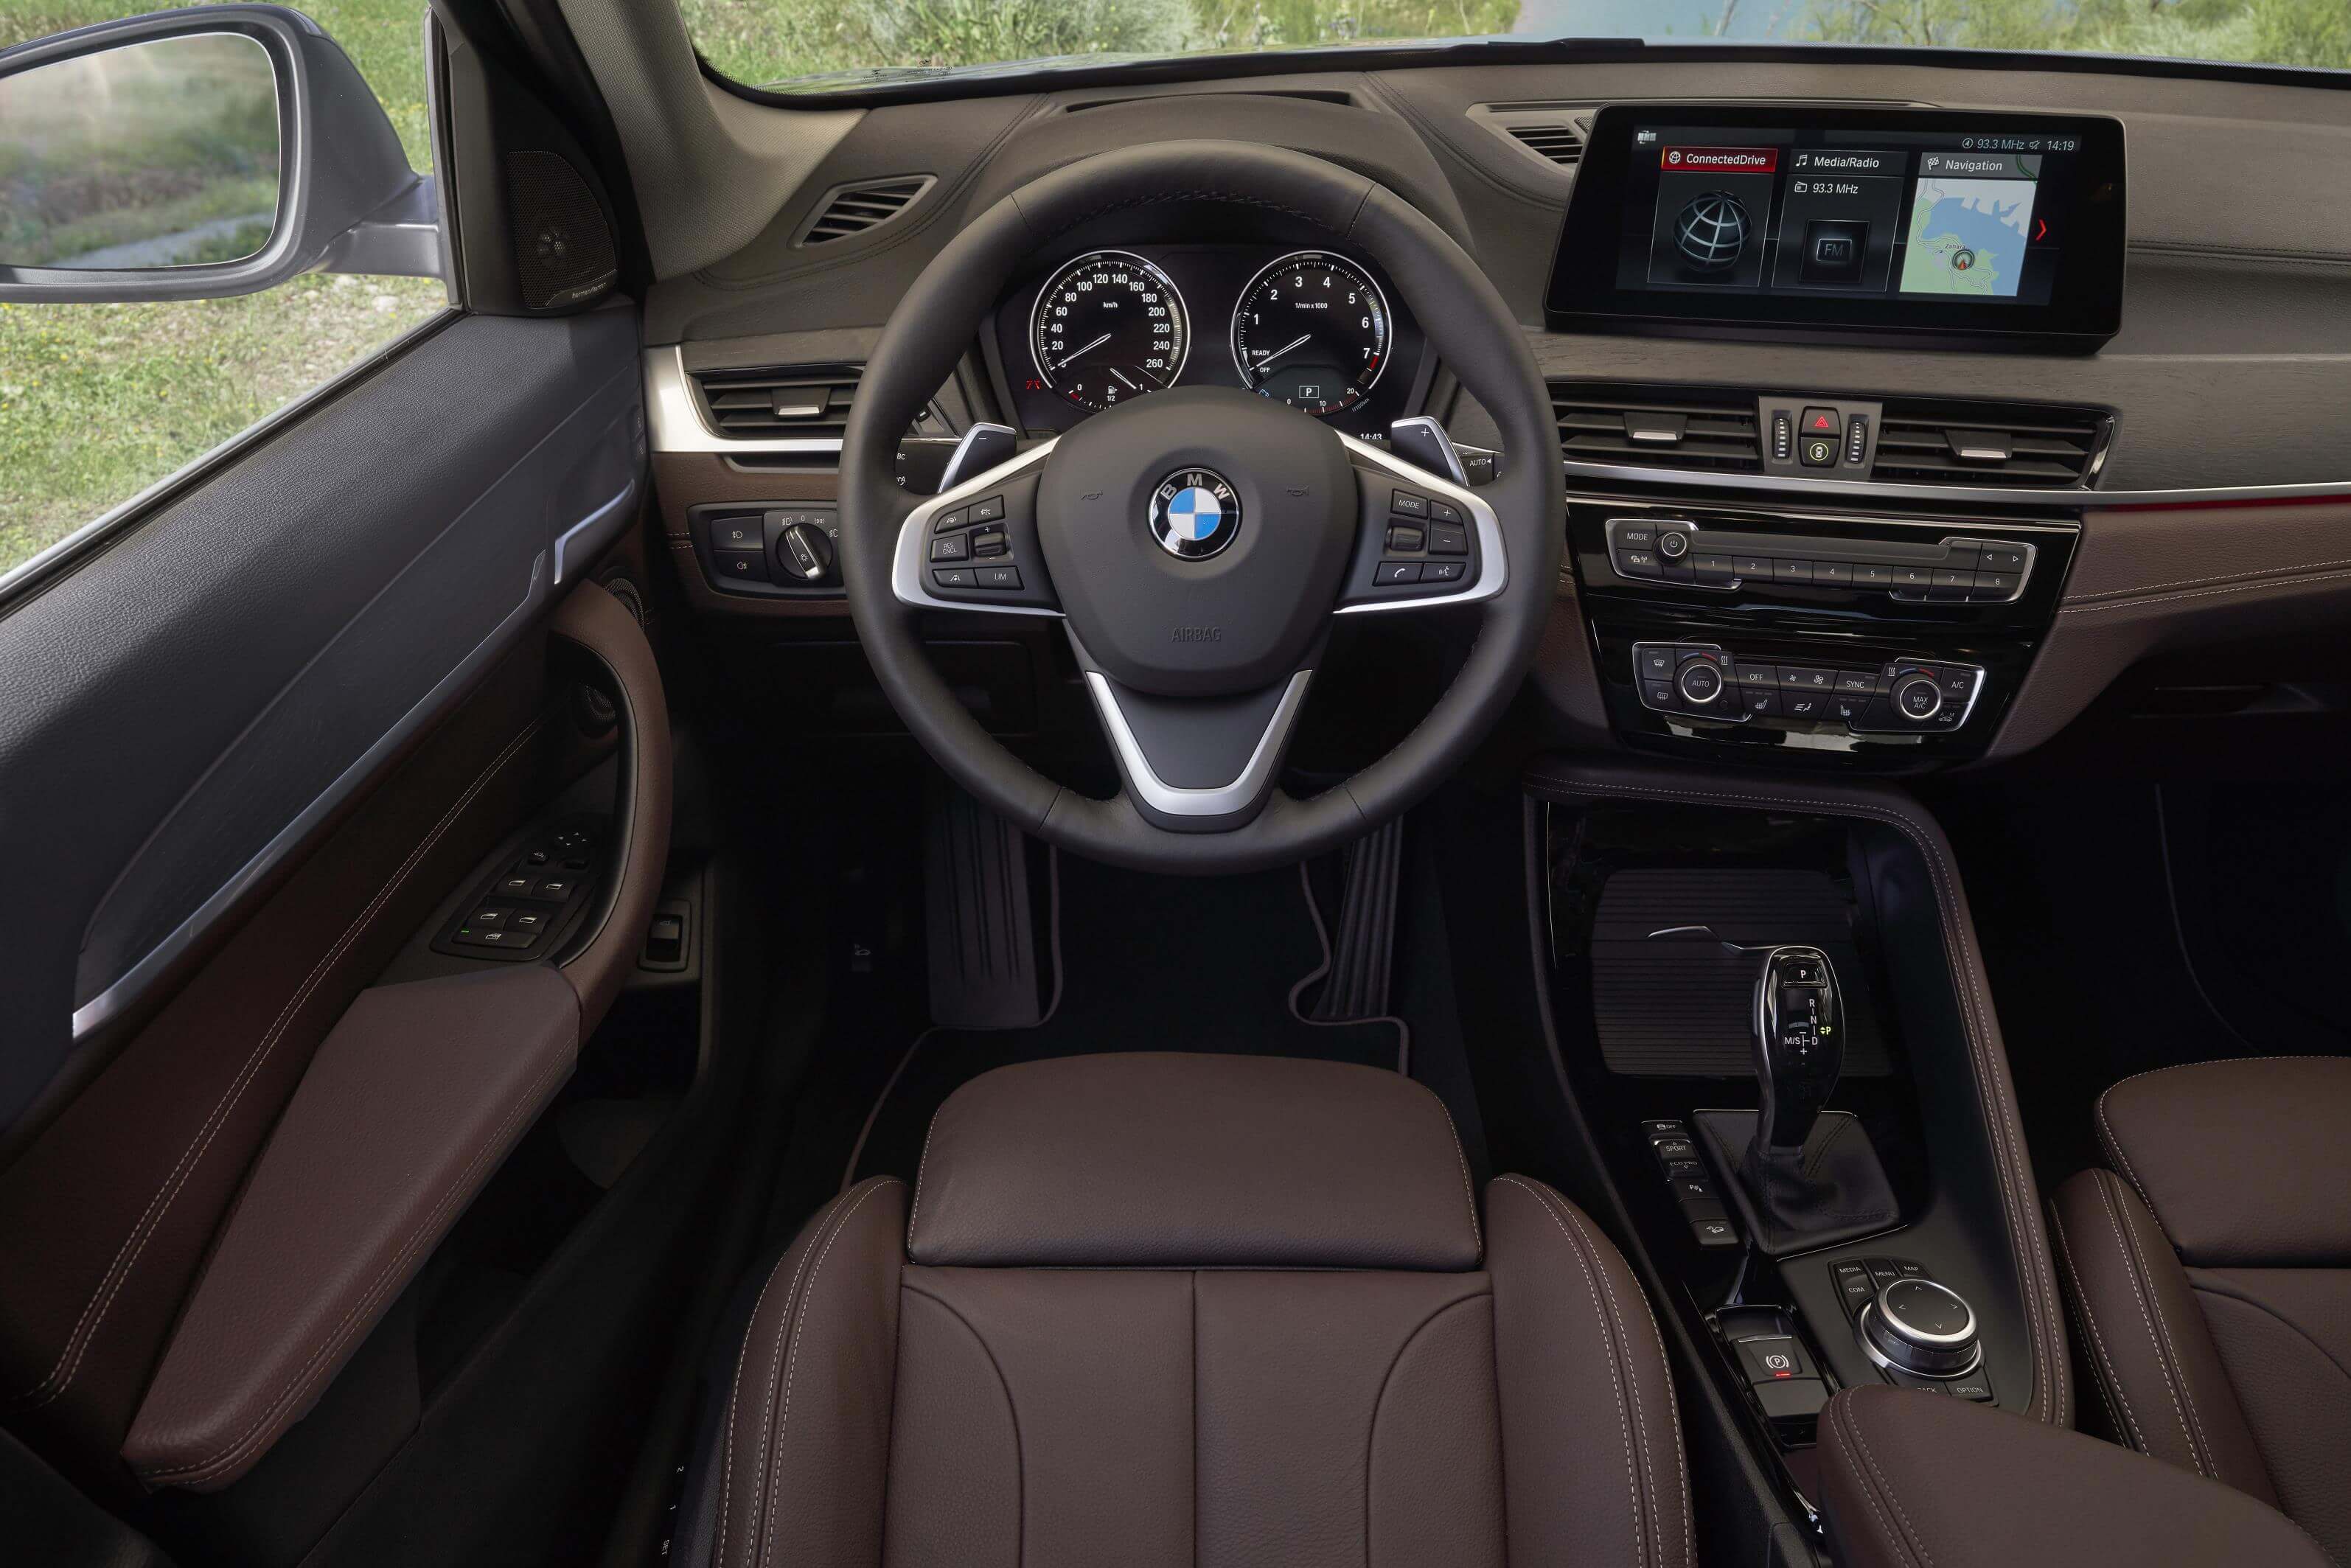 BMW X1 2019: interior